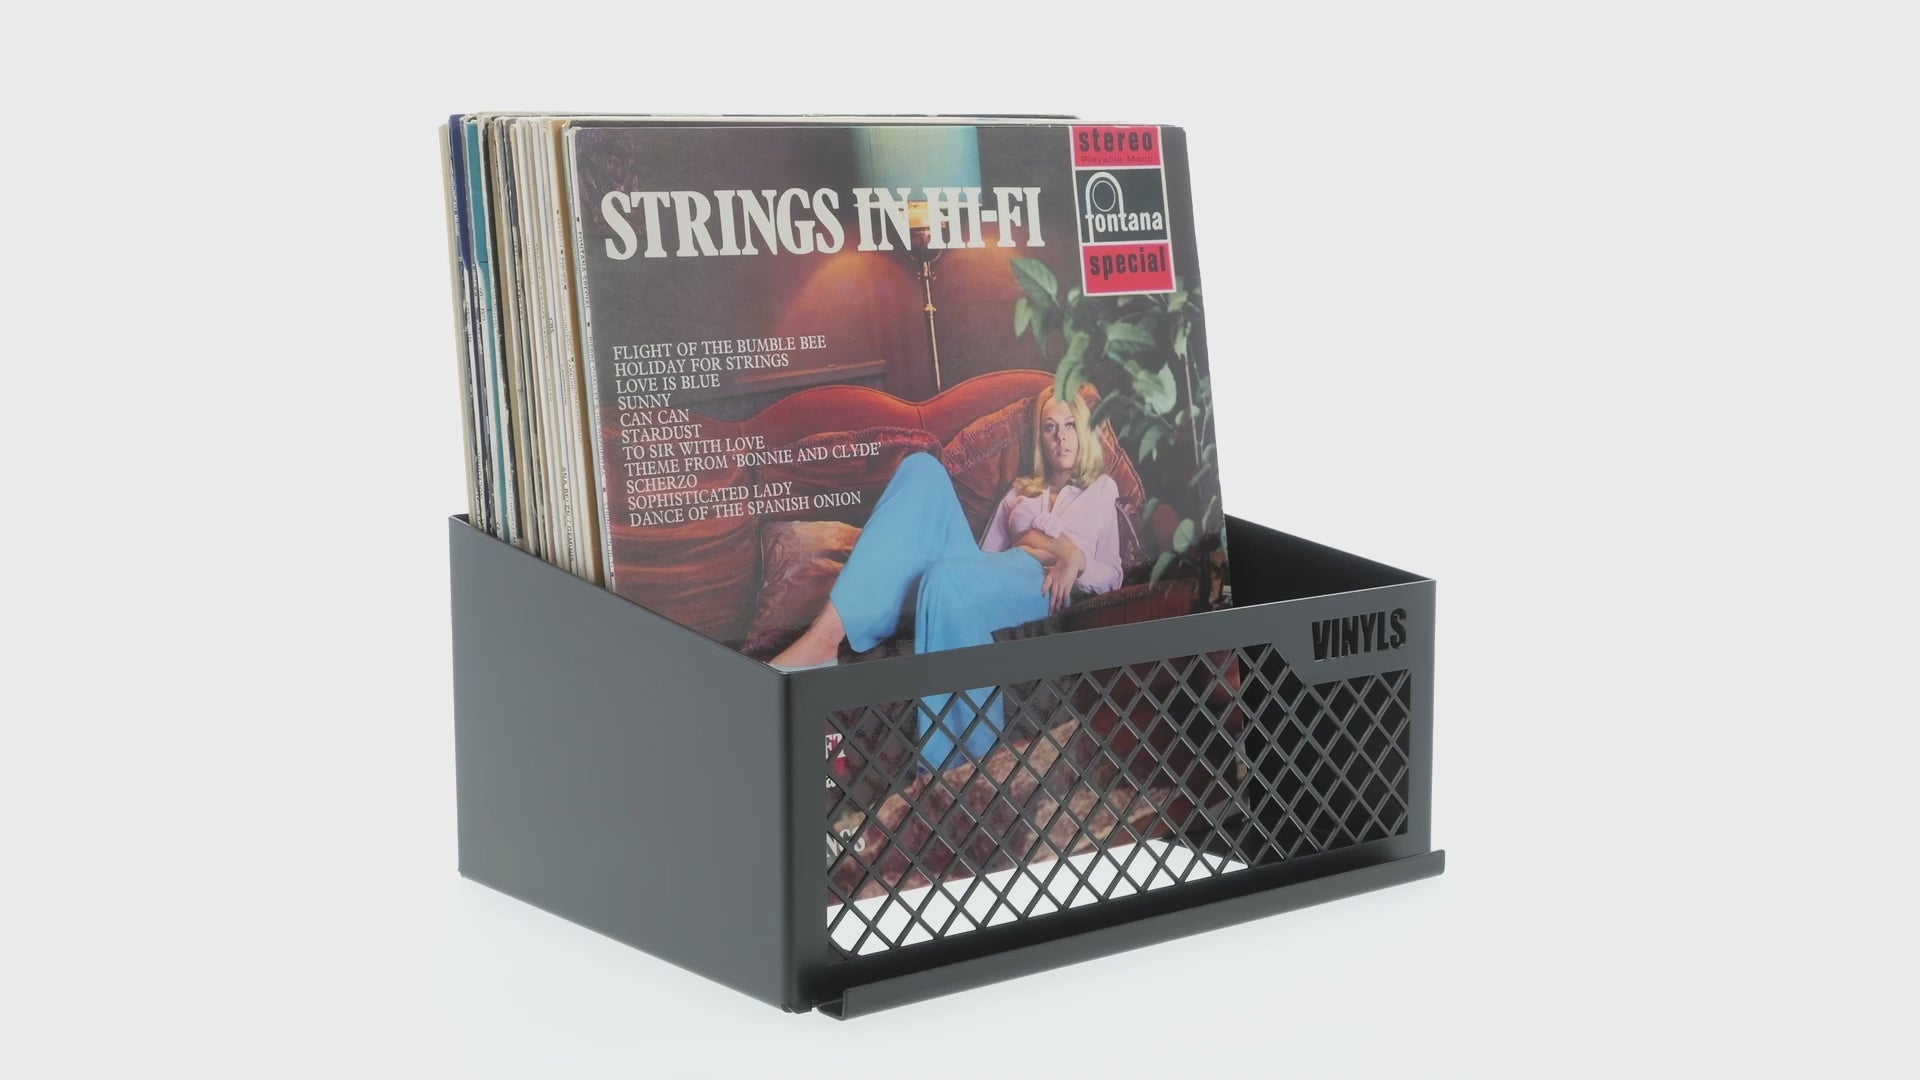 Soporte para Discos de Vinilo 50 LP Negro - Keep Them Spinning – Keep Them  Spinning™